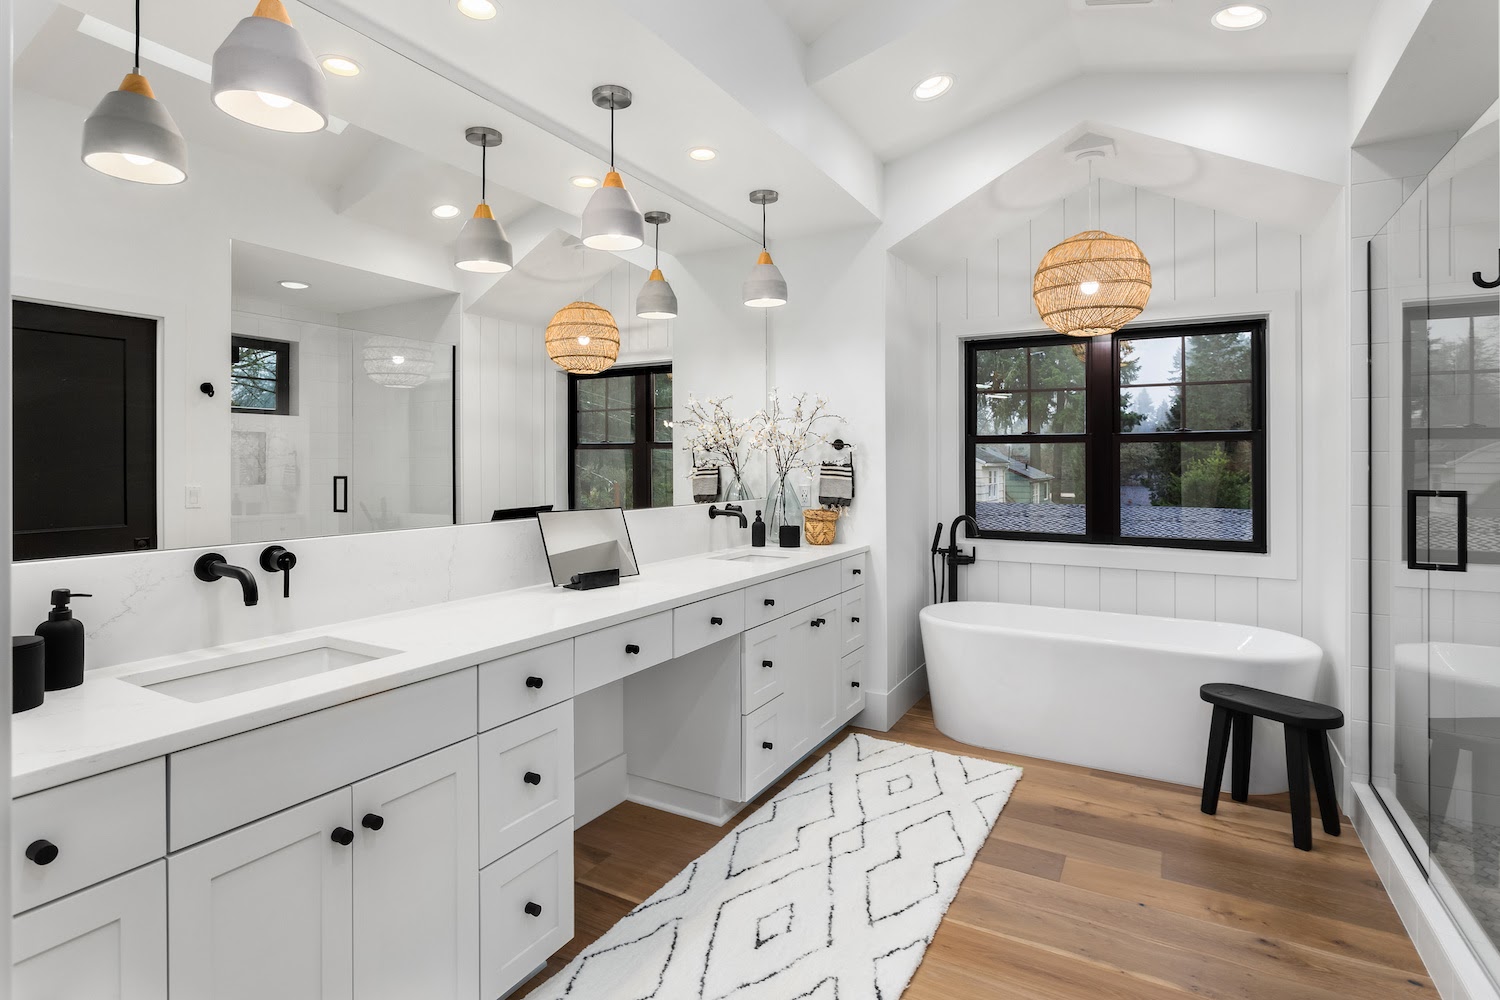 Top Bathroom Remodel Ideas in 2021 - Texas Remodeling Pros